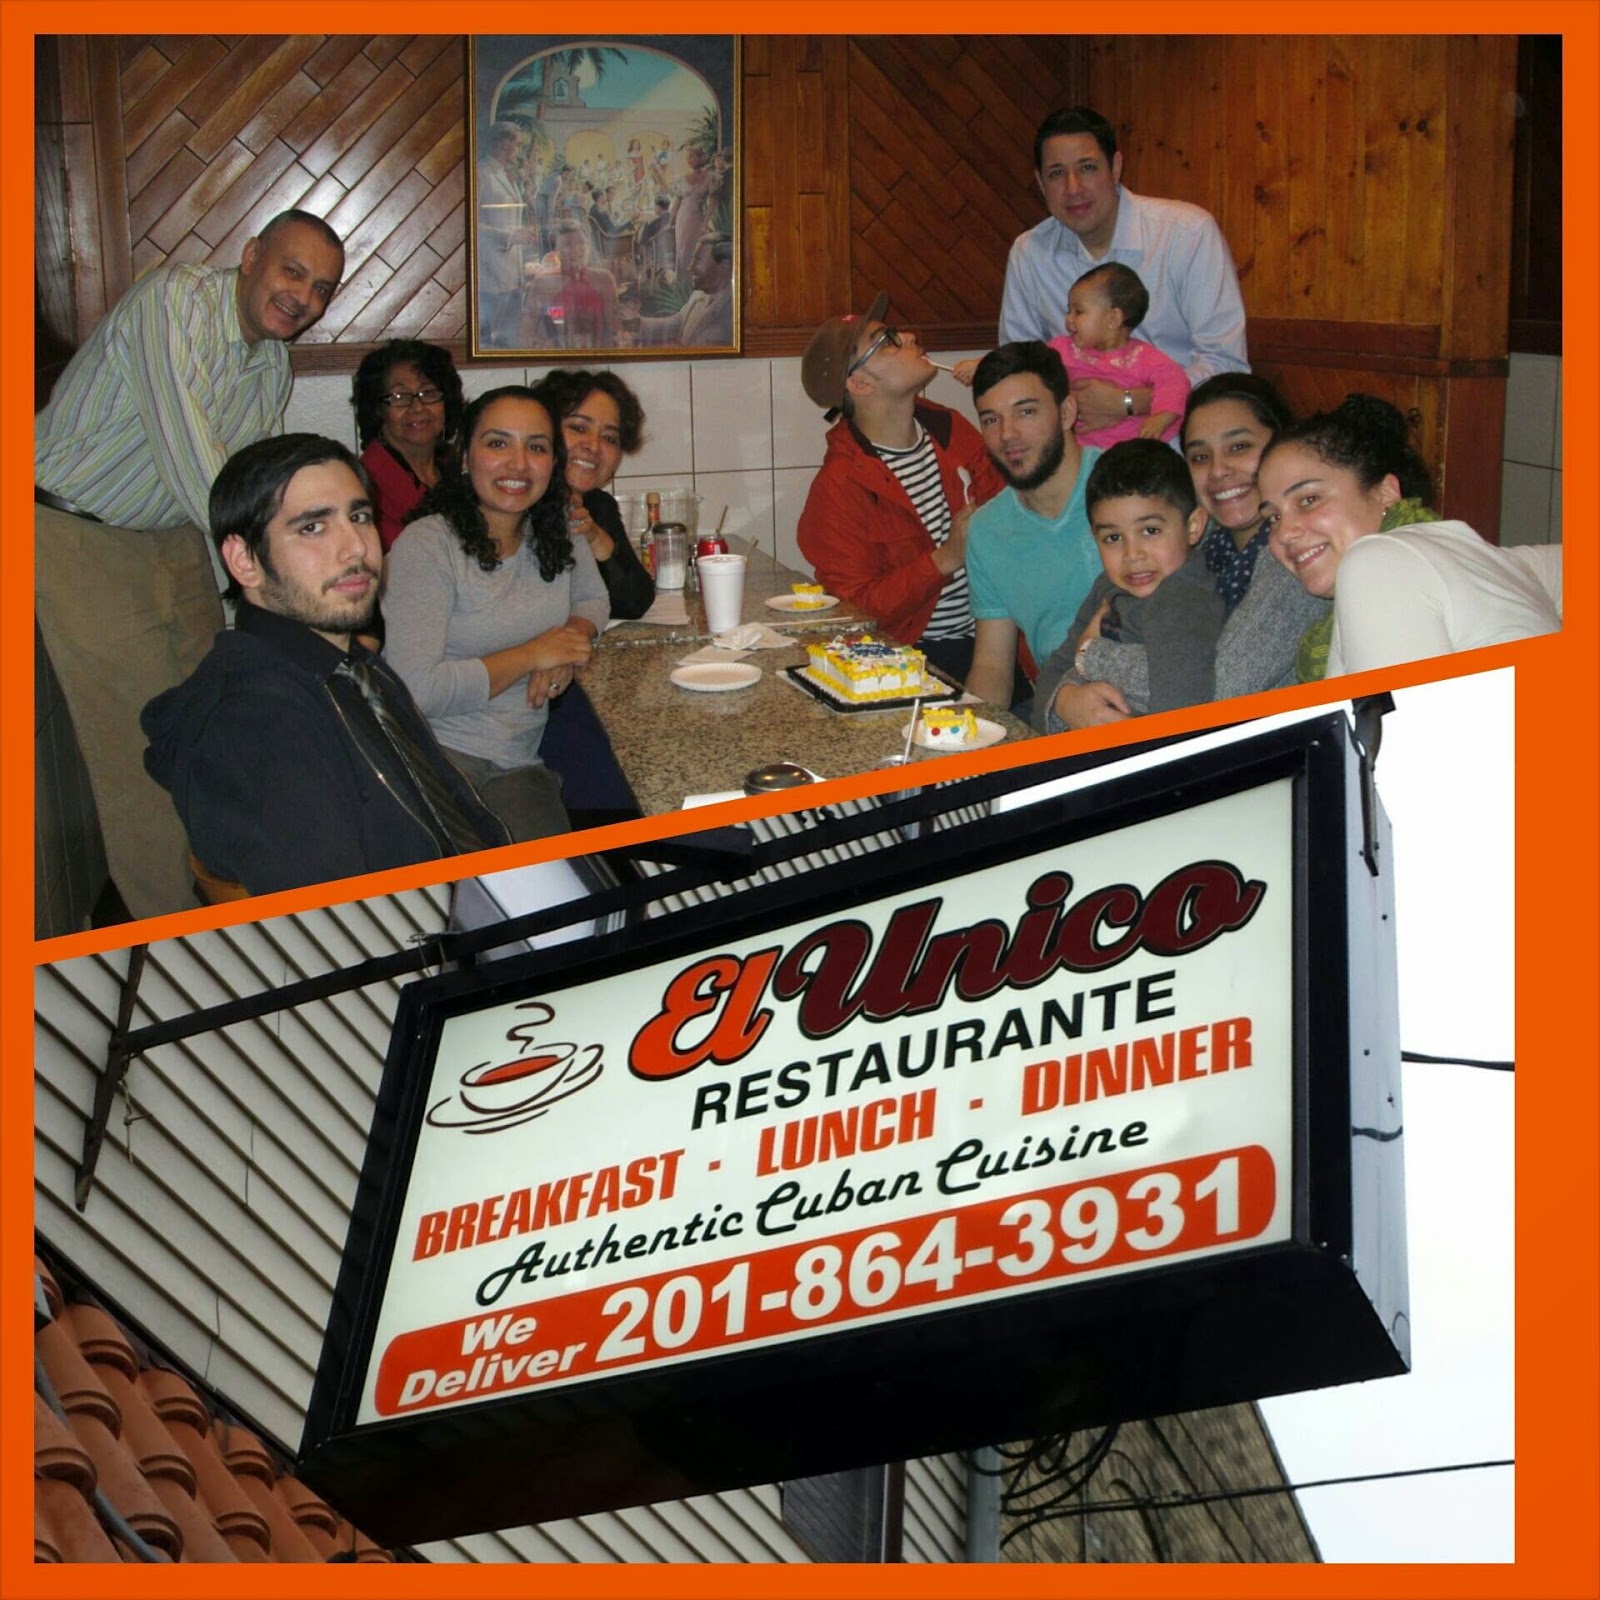 Photo of El Unico de Elena Restaurant & Cafeteria in Union City, New Jersey, United States - 5 Picture of Restaurant, Food, Point of interest, Establishment